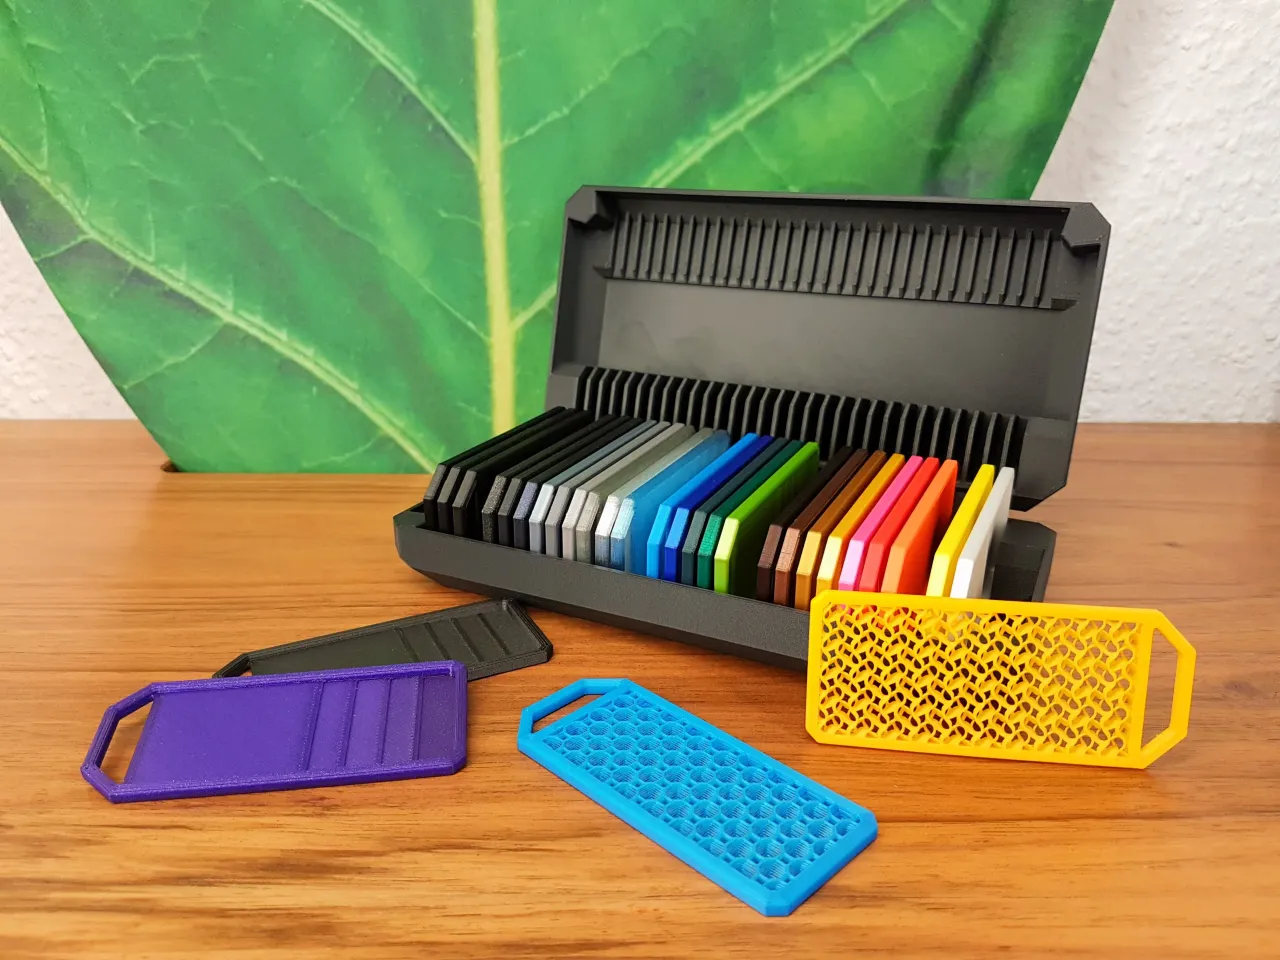  32 Colors Beautiful 3D Printing PLA Filament Sample